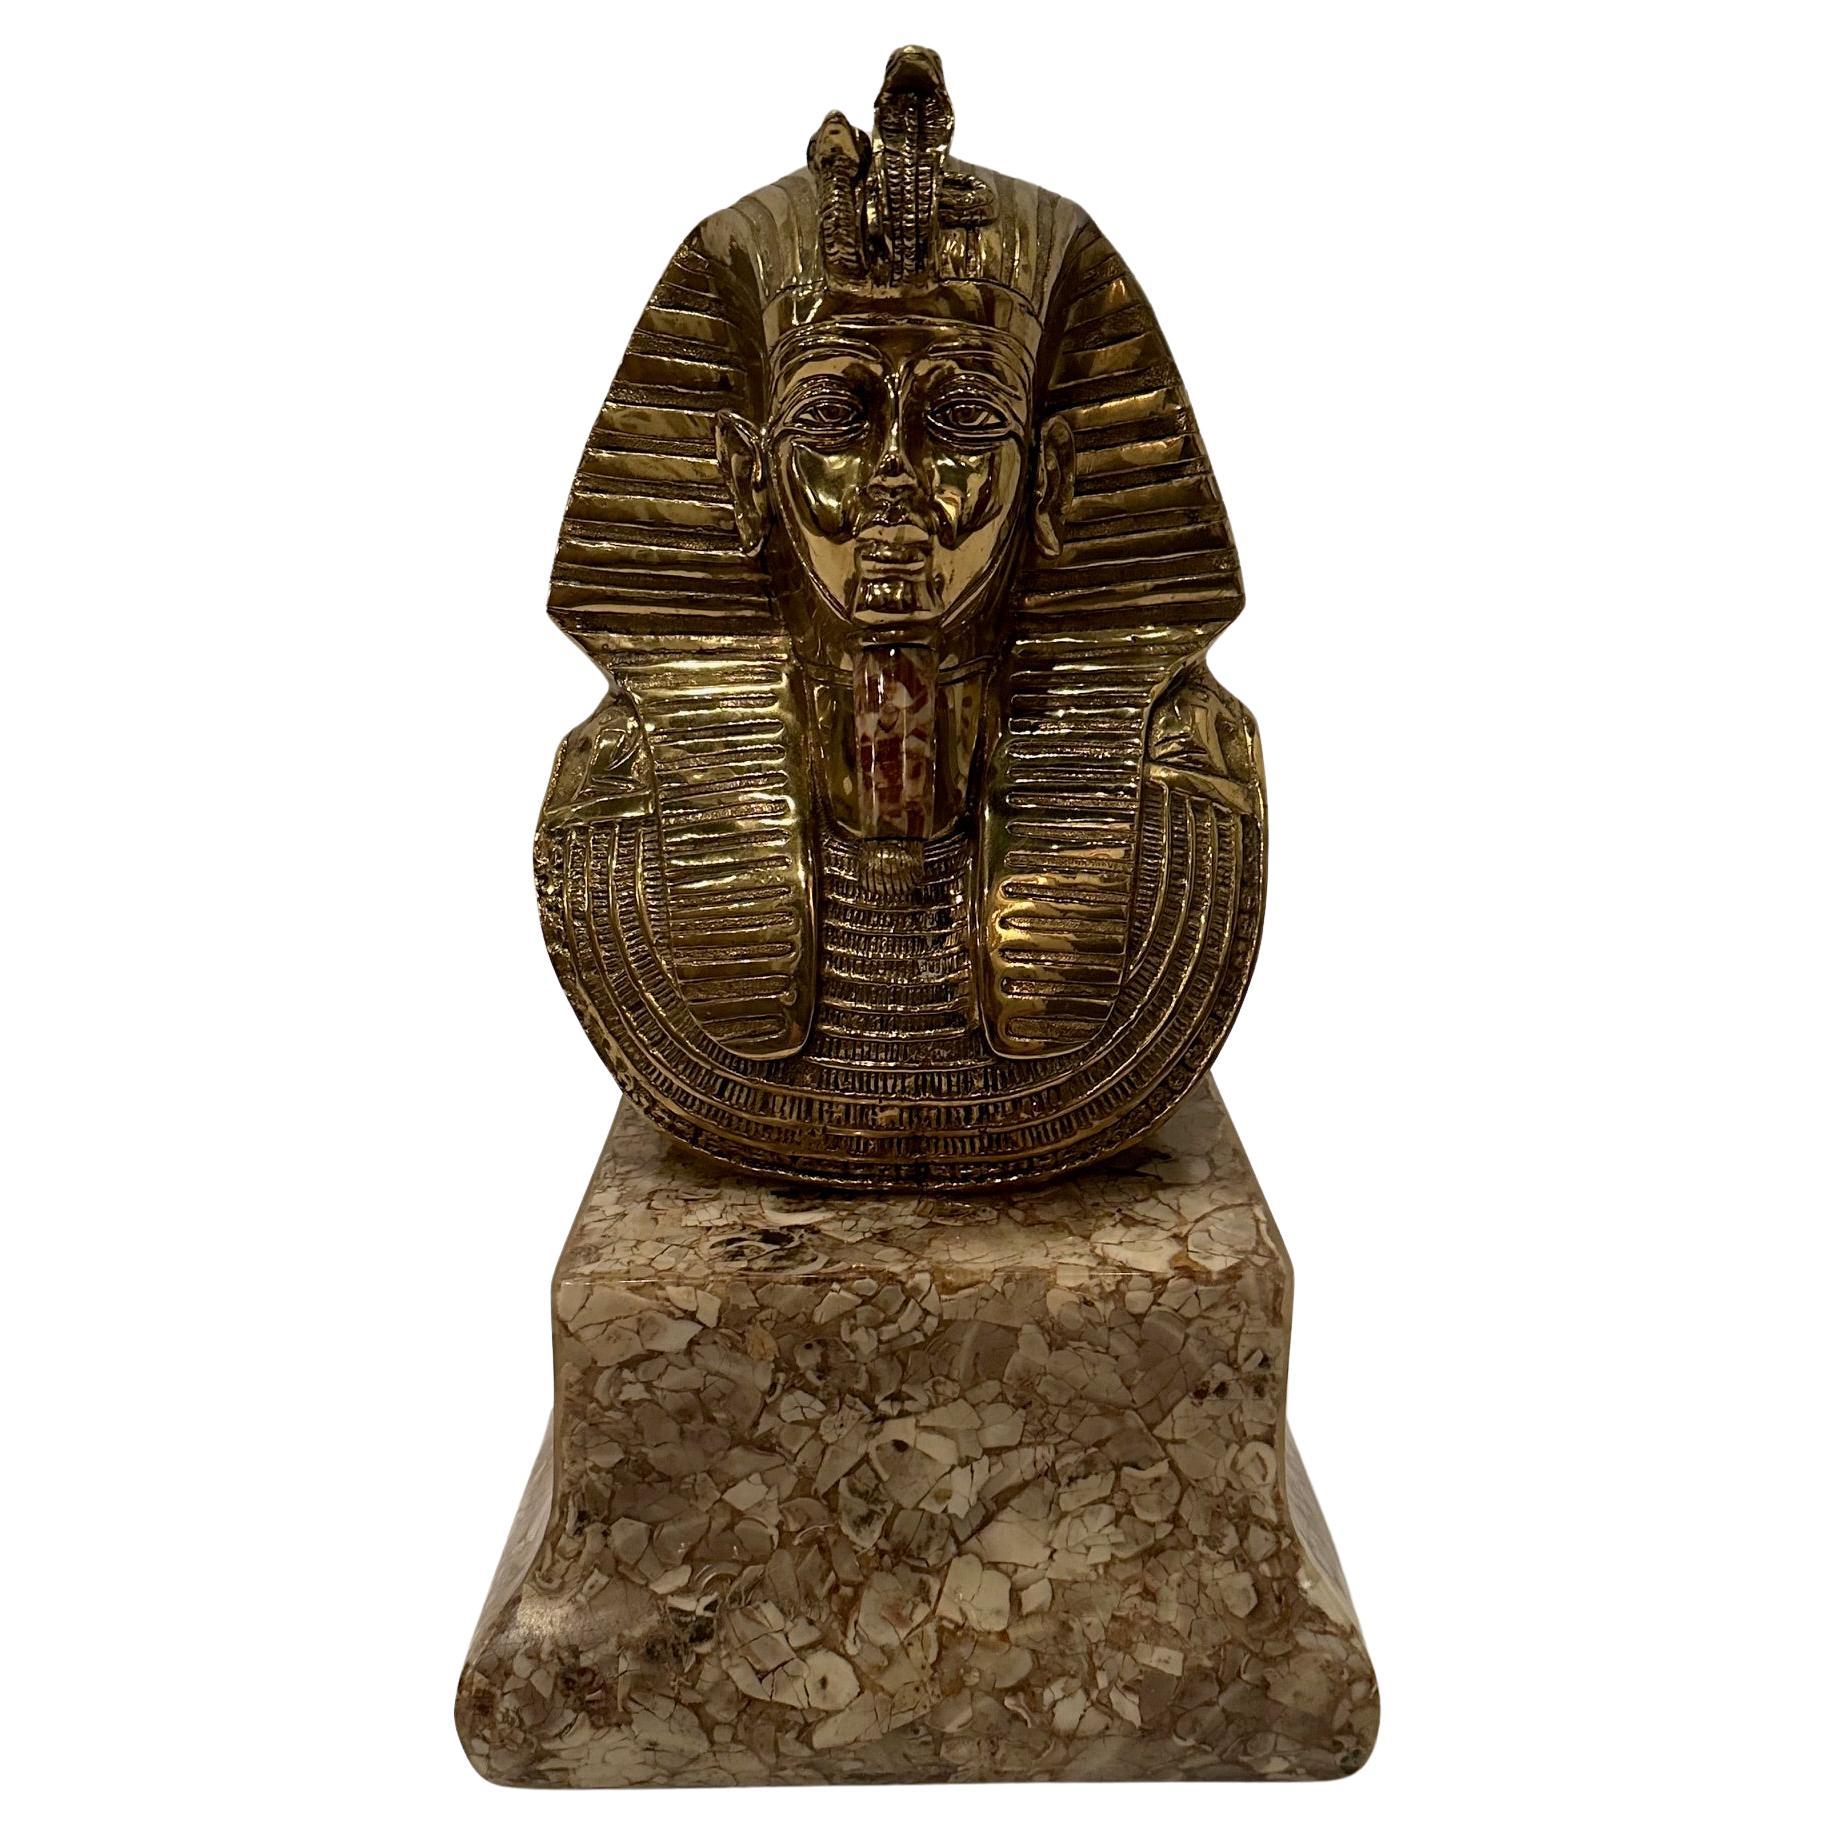 Grand buste impressionnant du roi Toutânkhamon